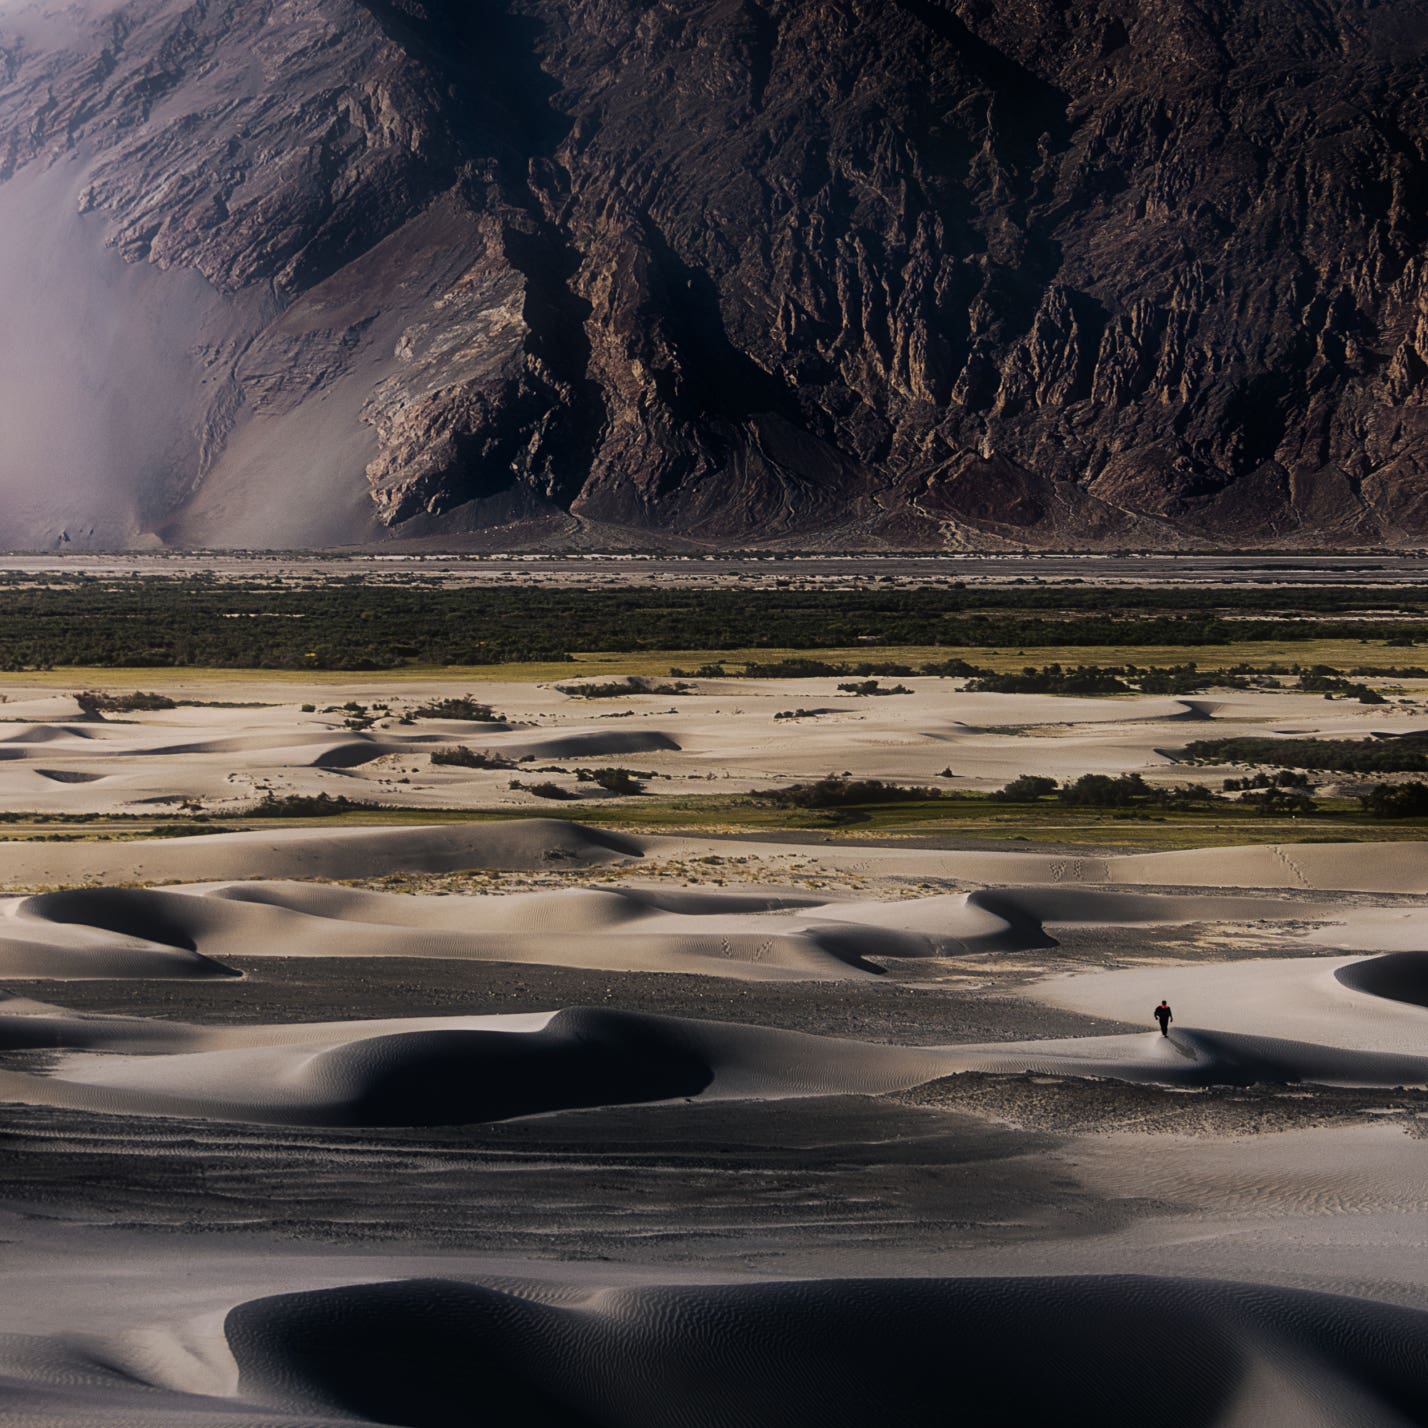 Sand dunes of Nubra